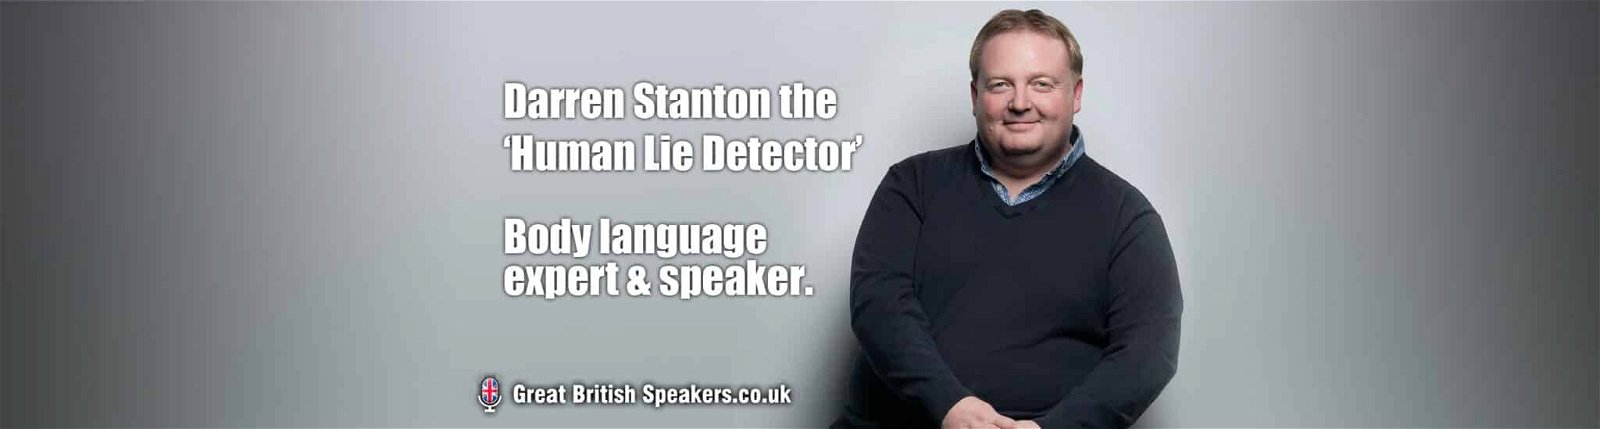 Darren Stanton celebrity Body language expert speaker at Great British Speakers